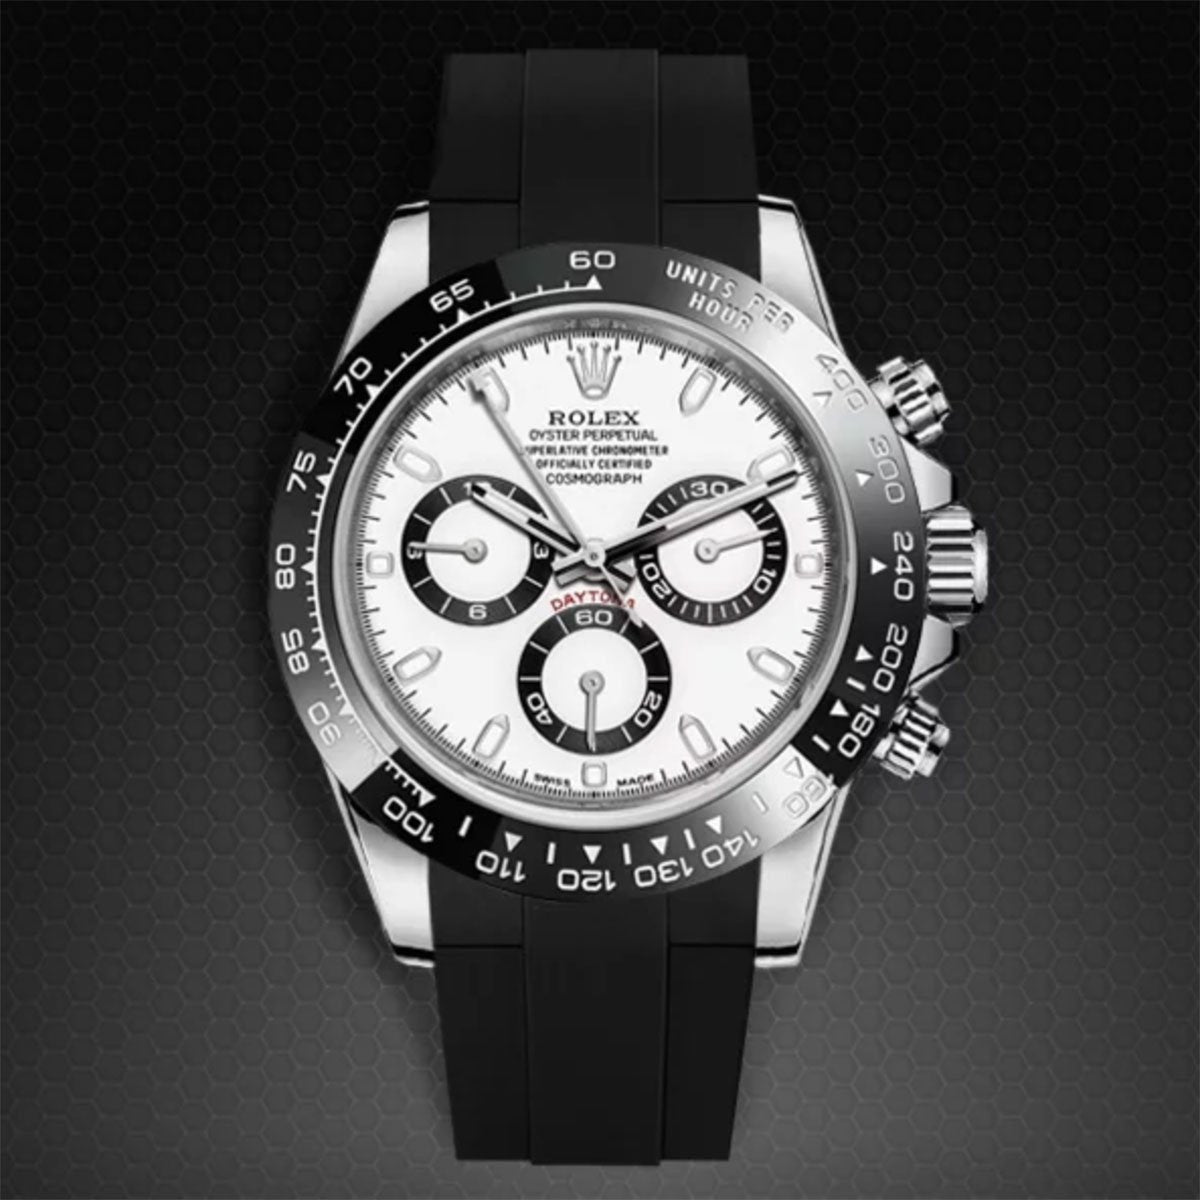 Rolex - Phillips Watches Online Auctio... Lot 26 March 2023 | Phillips